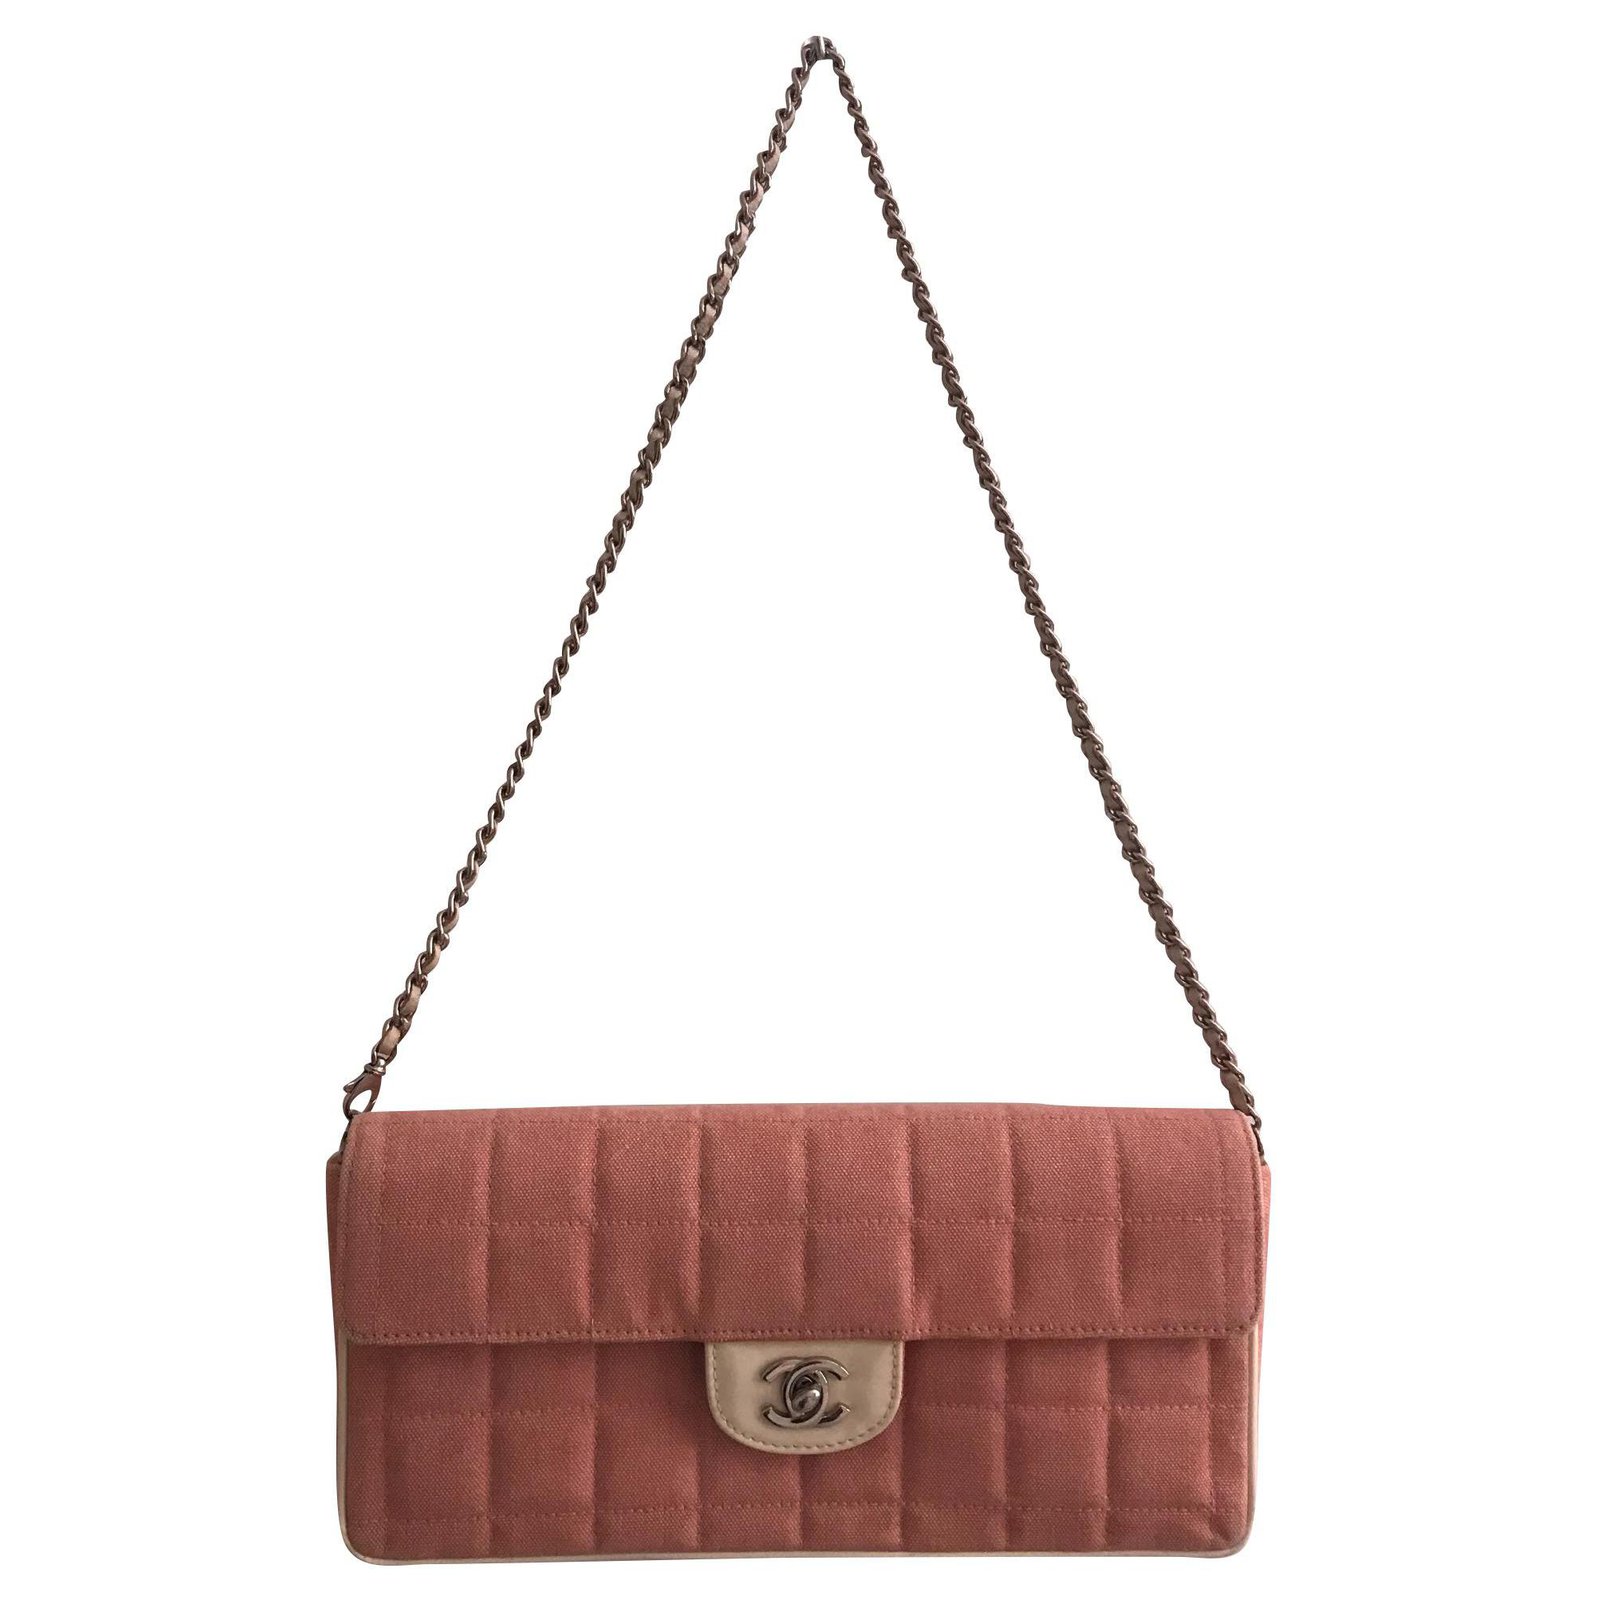 Chanel Pink Rhinestone Embellished Leather Strass Chocolate Bar Bag